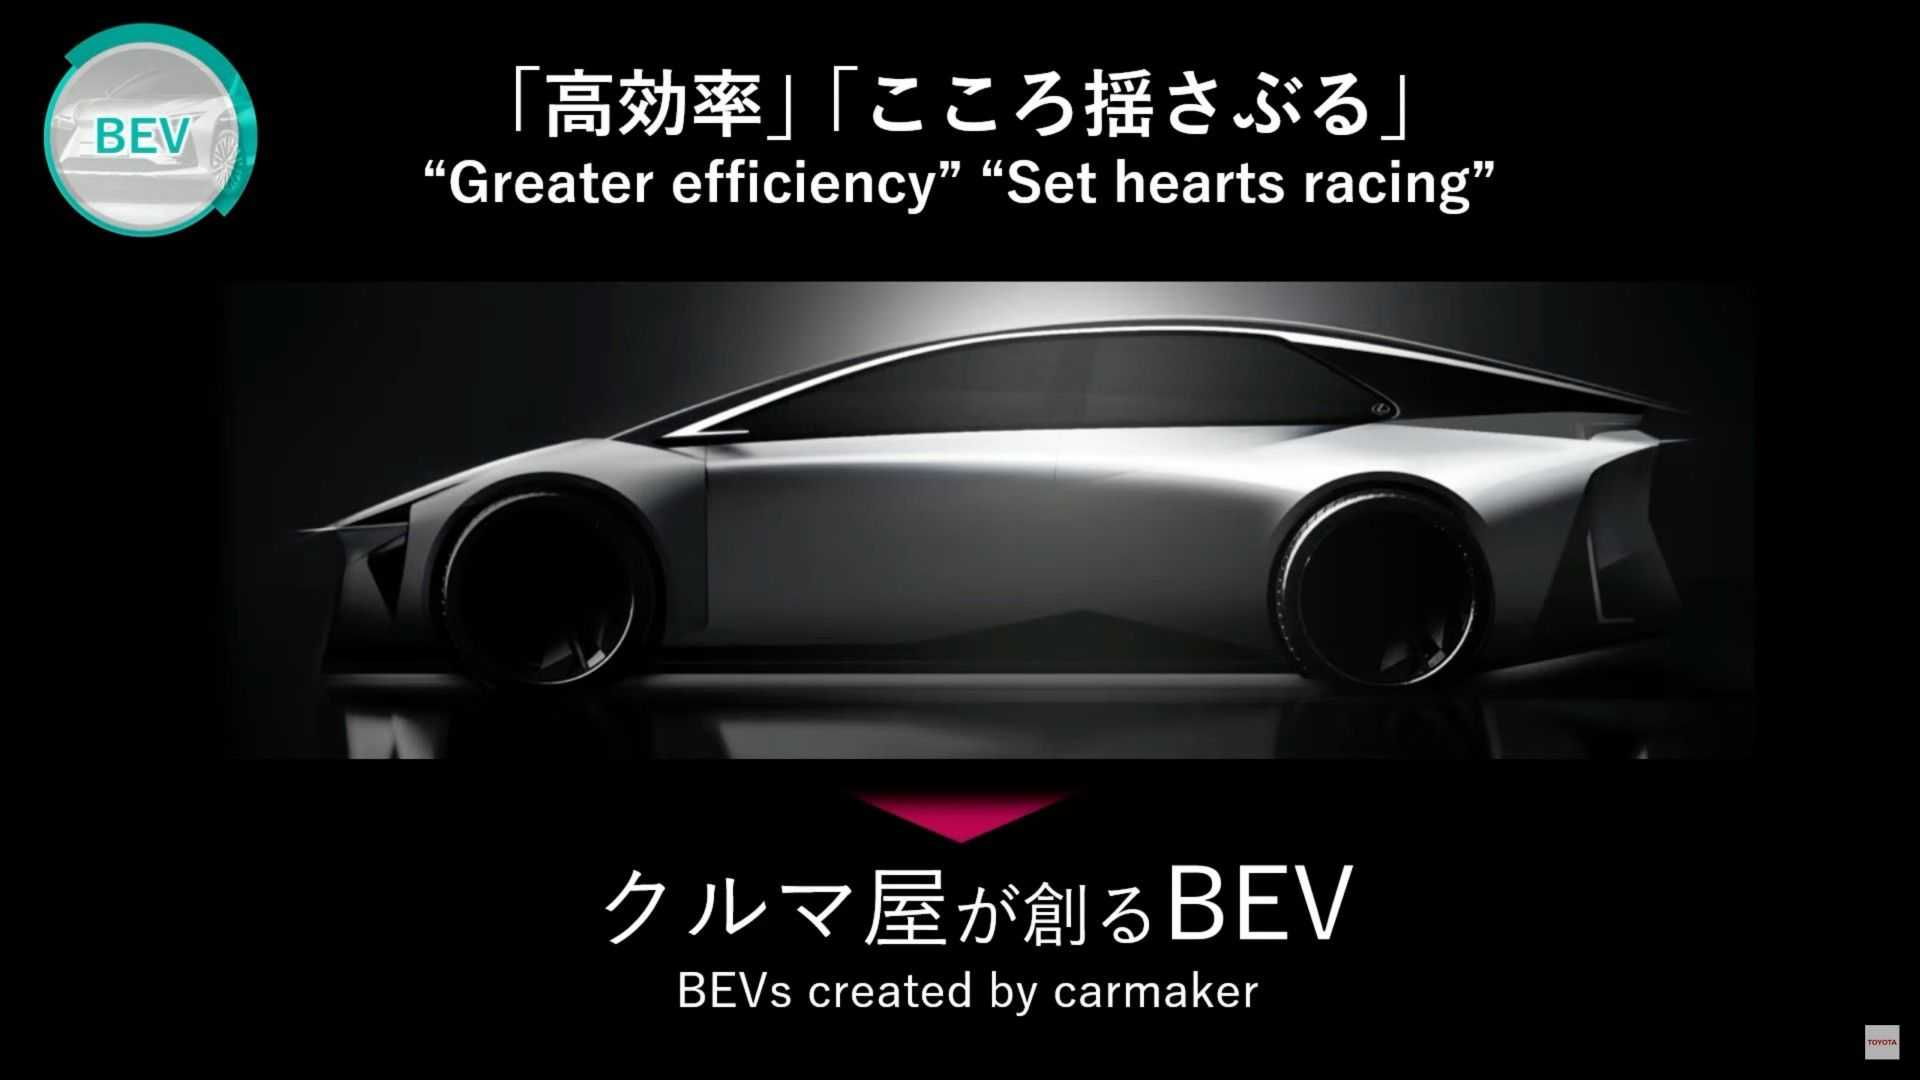 Toyota Motor Corp strategy update on BEVs presentation slides: Lexus teaser